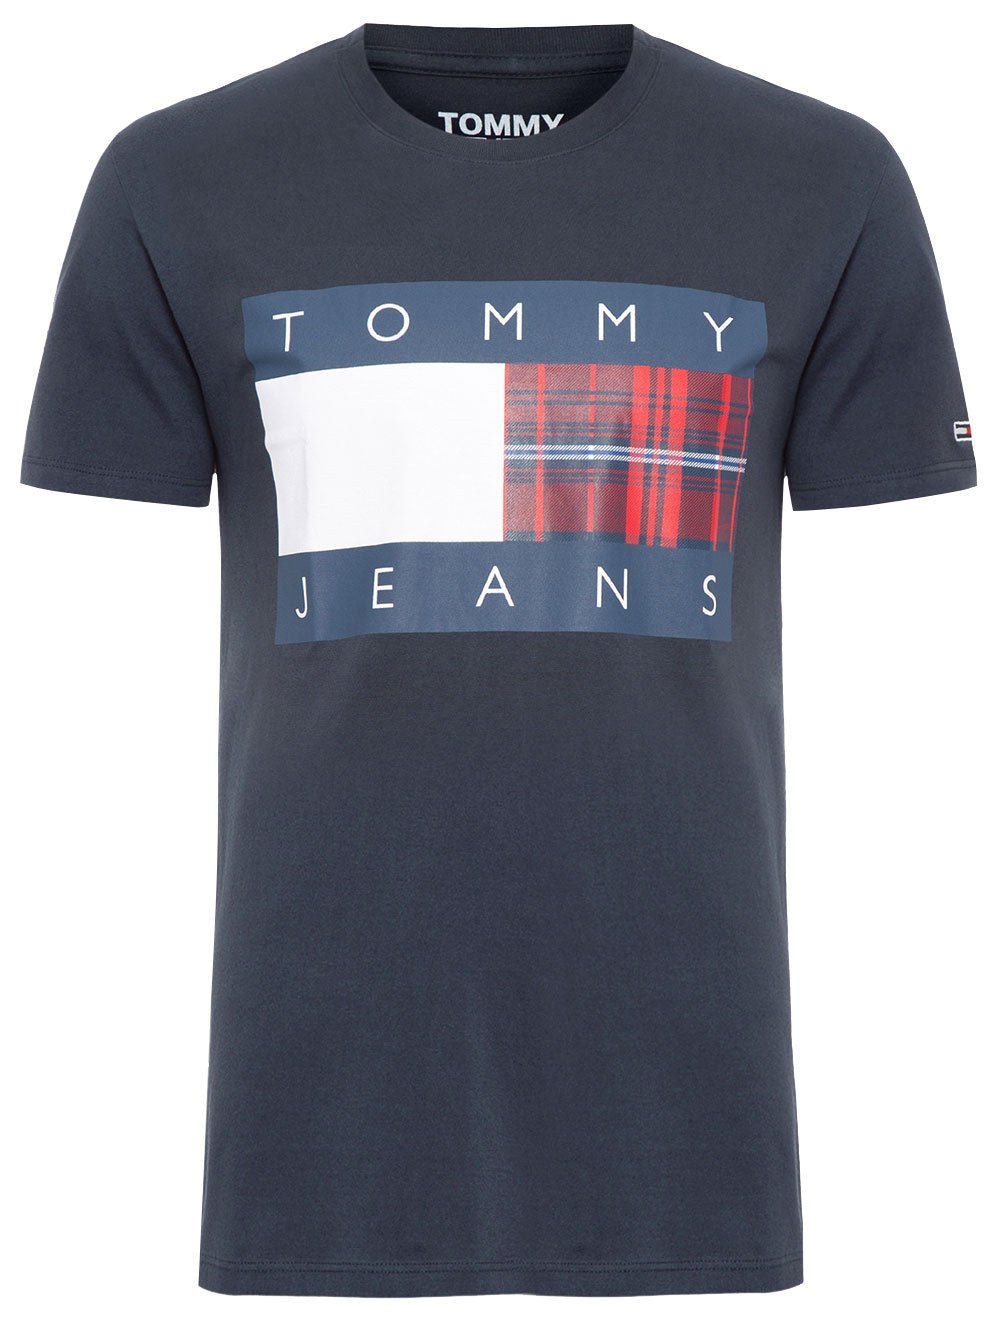 Camiseta Tommy Jeans Masculina Plaid Centre Flag Azul Marinho